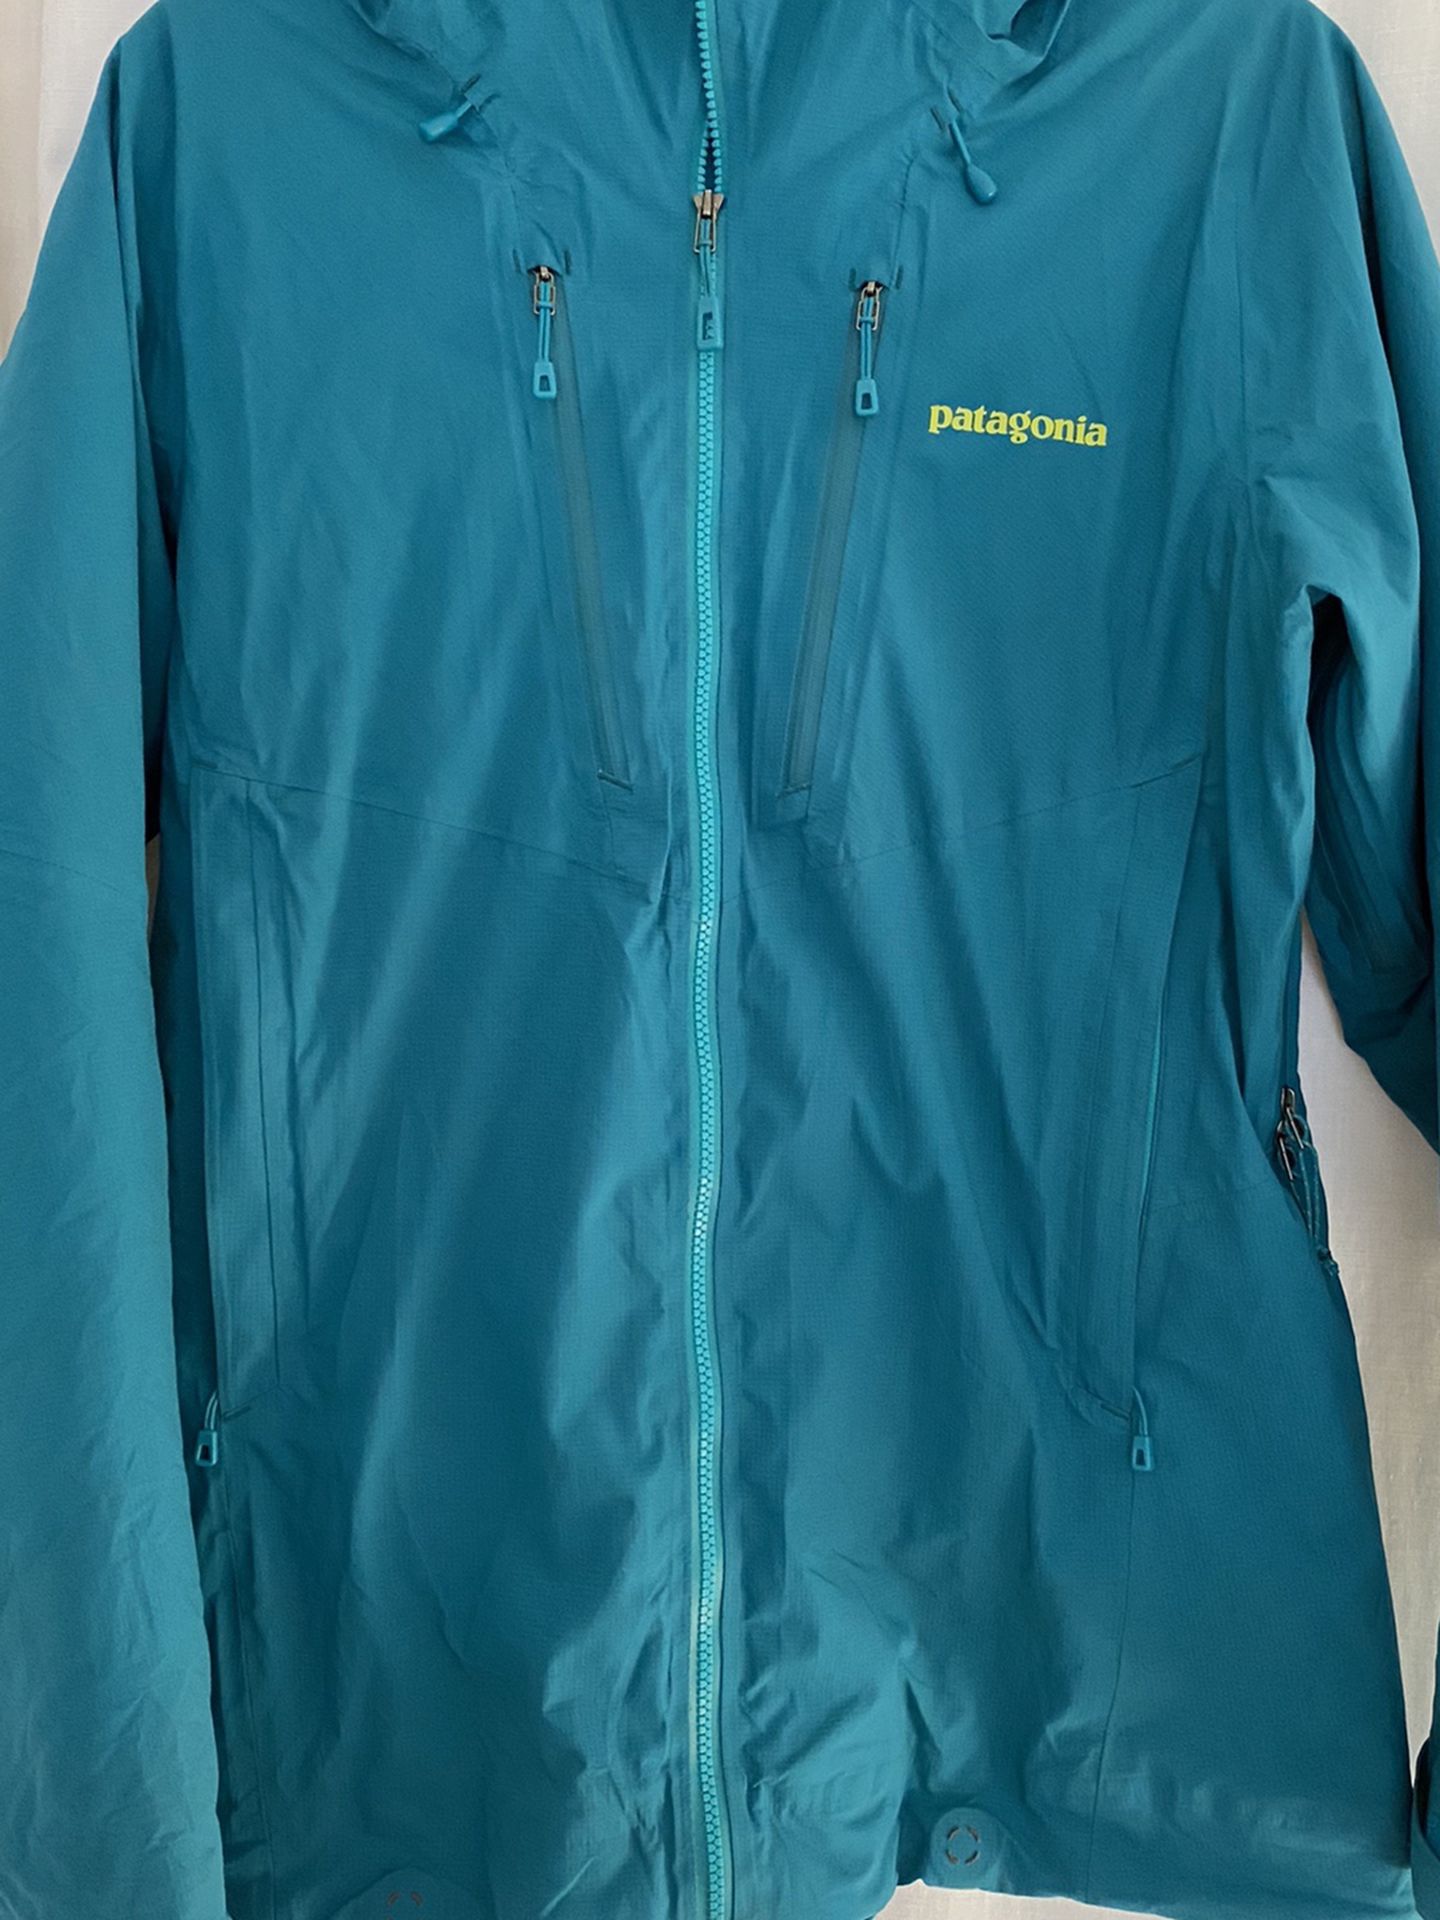 Patagonia Stretch Nano Storm jacket women’s size medium